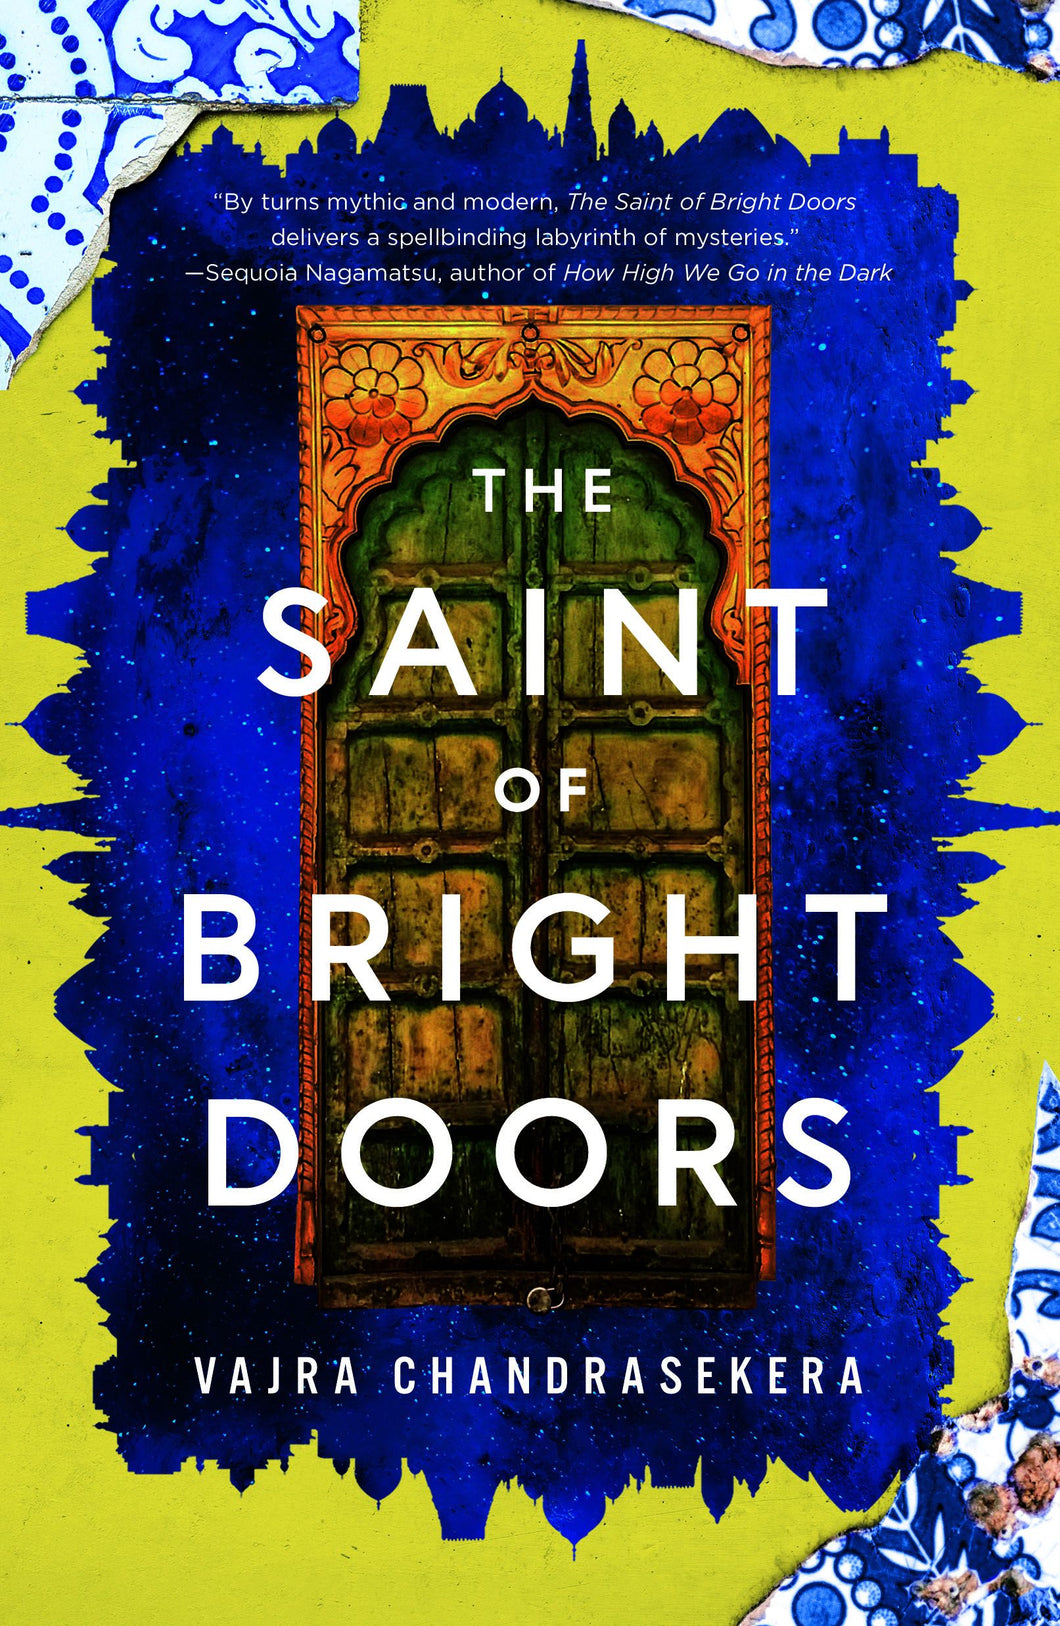 The Saint of Bright Doors - Vajra Chandrasekera